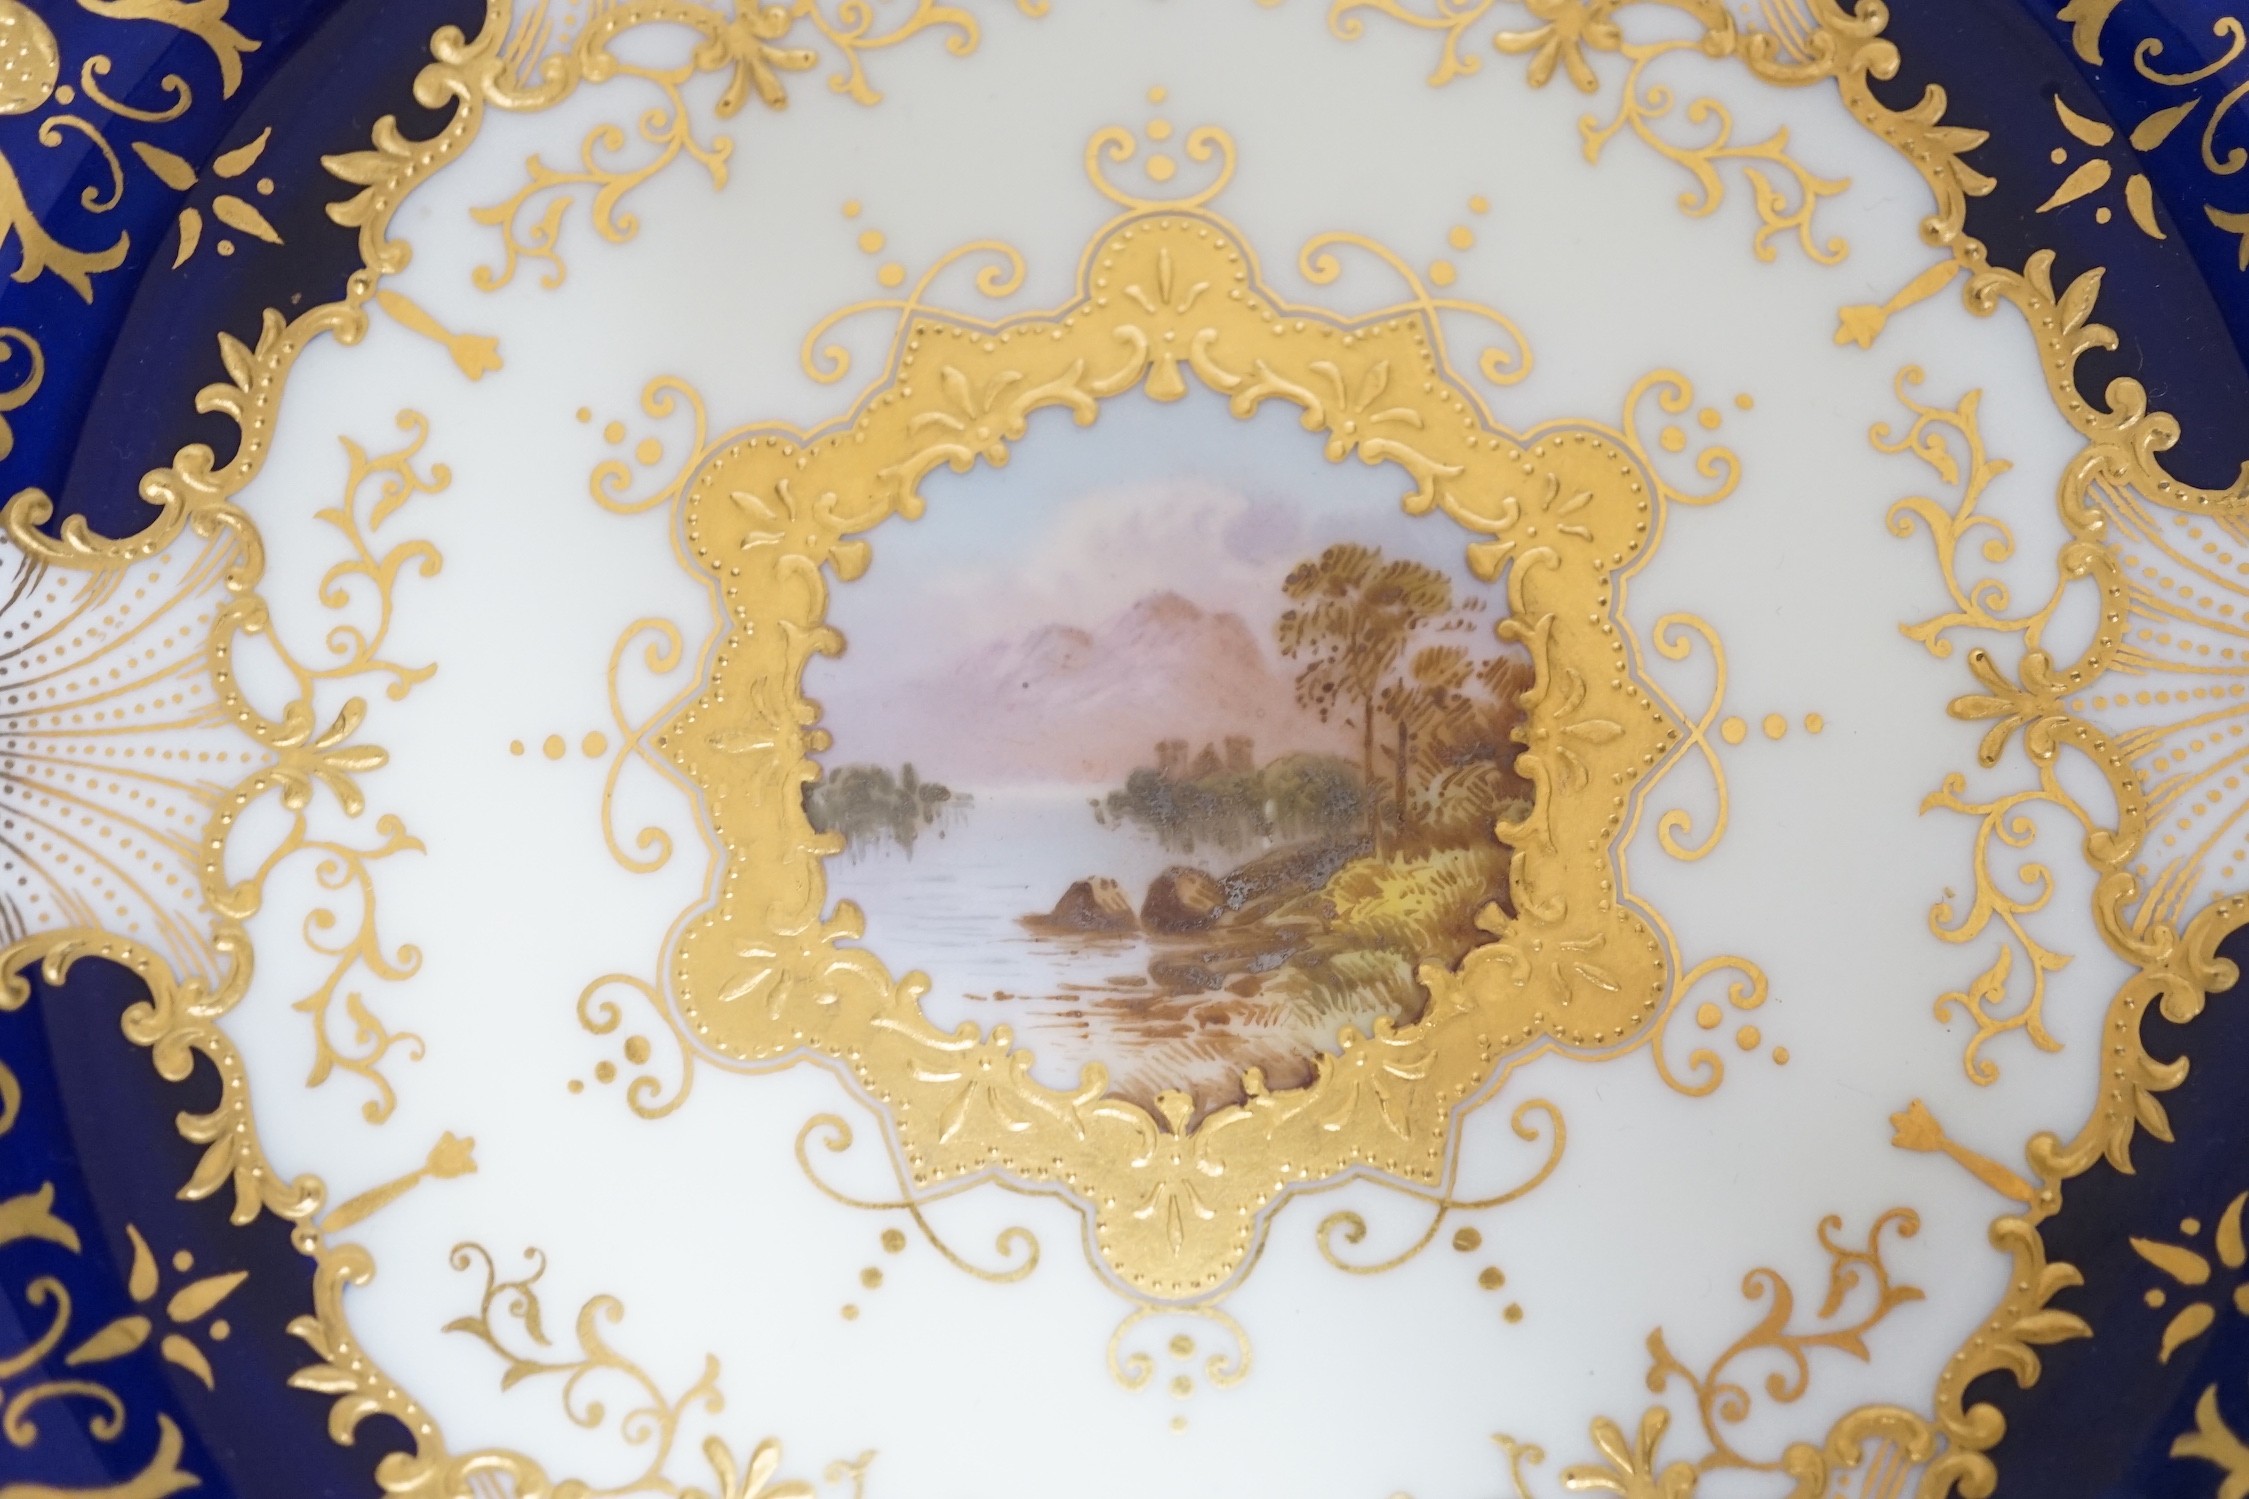 A 19th century Coalport cabinet plate, 23cm diameter